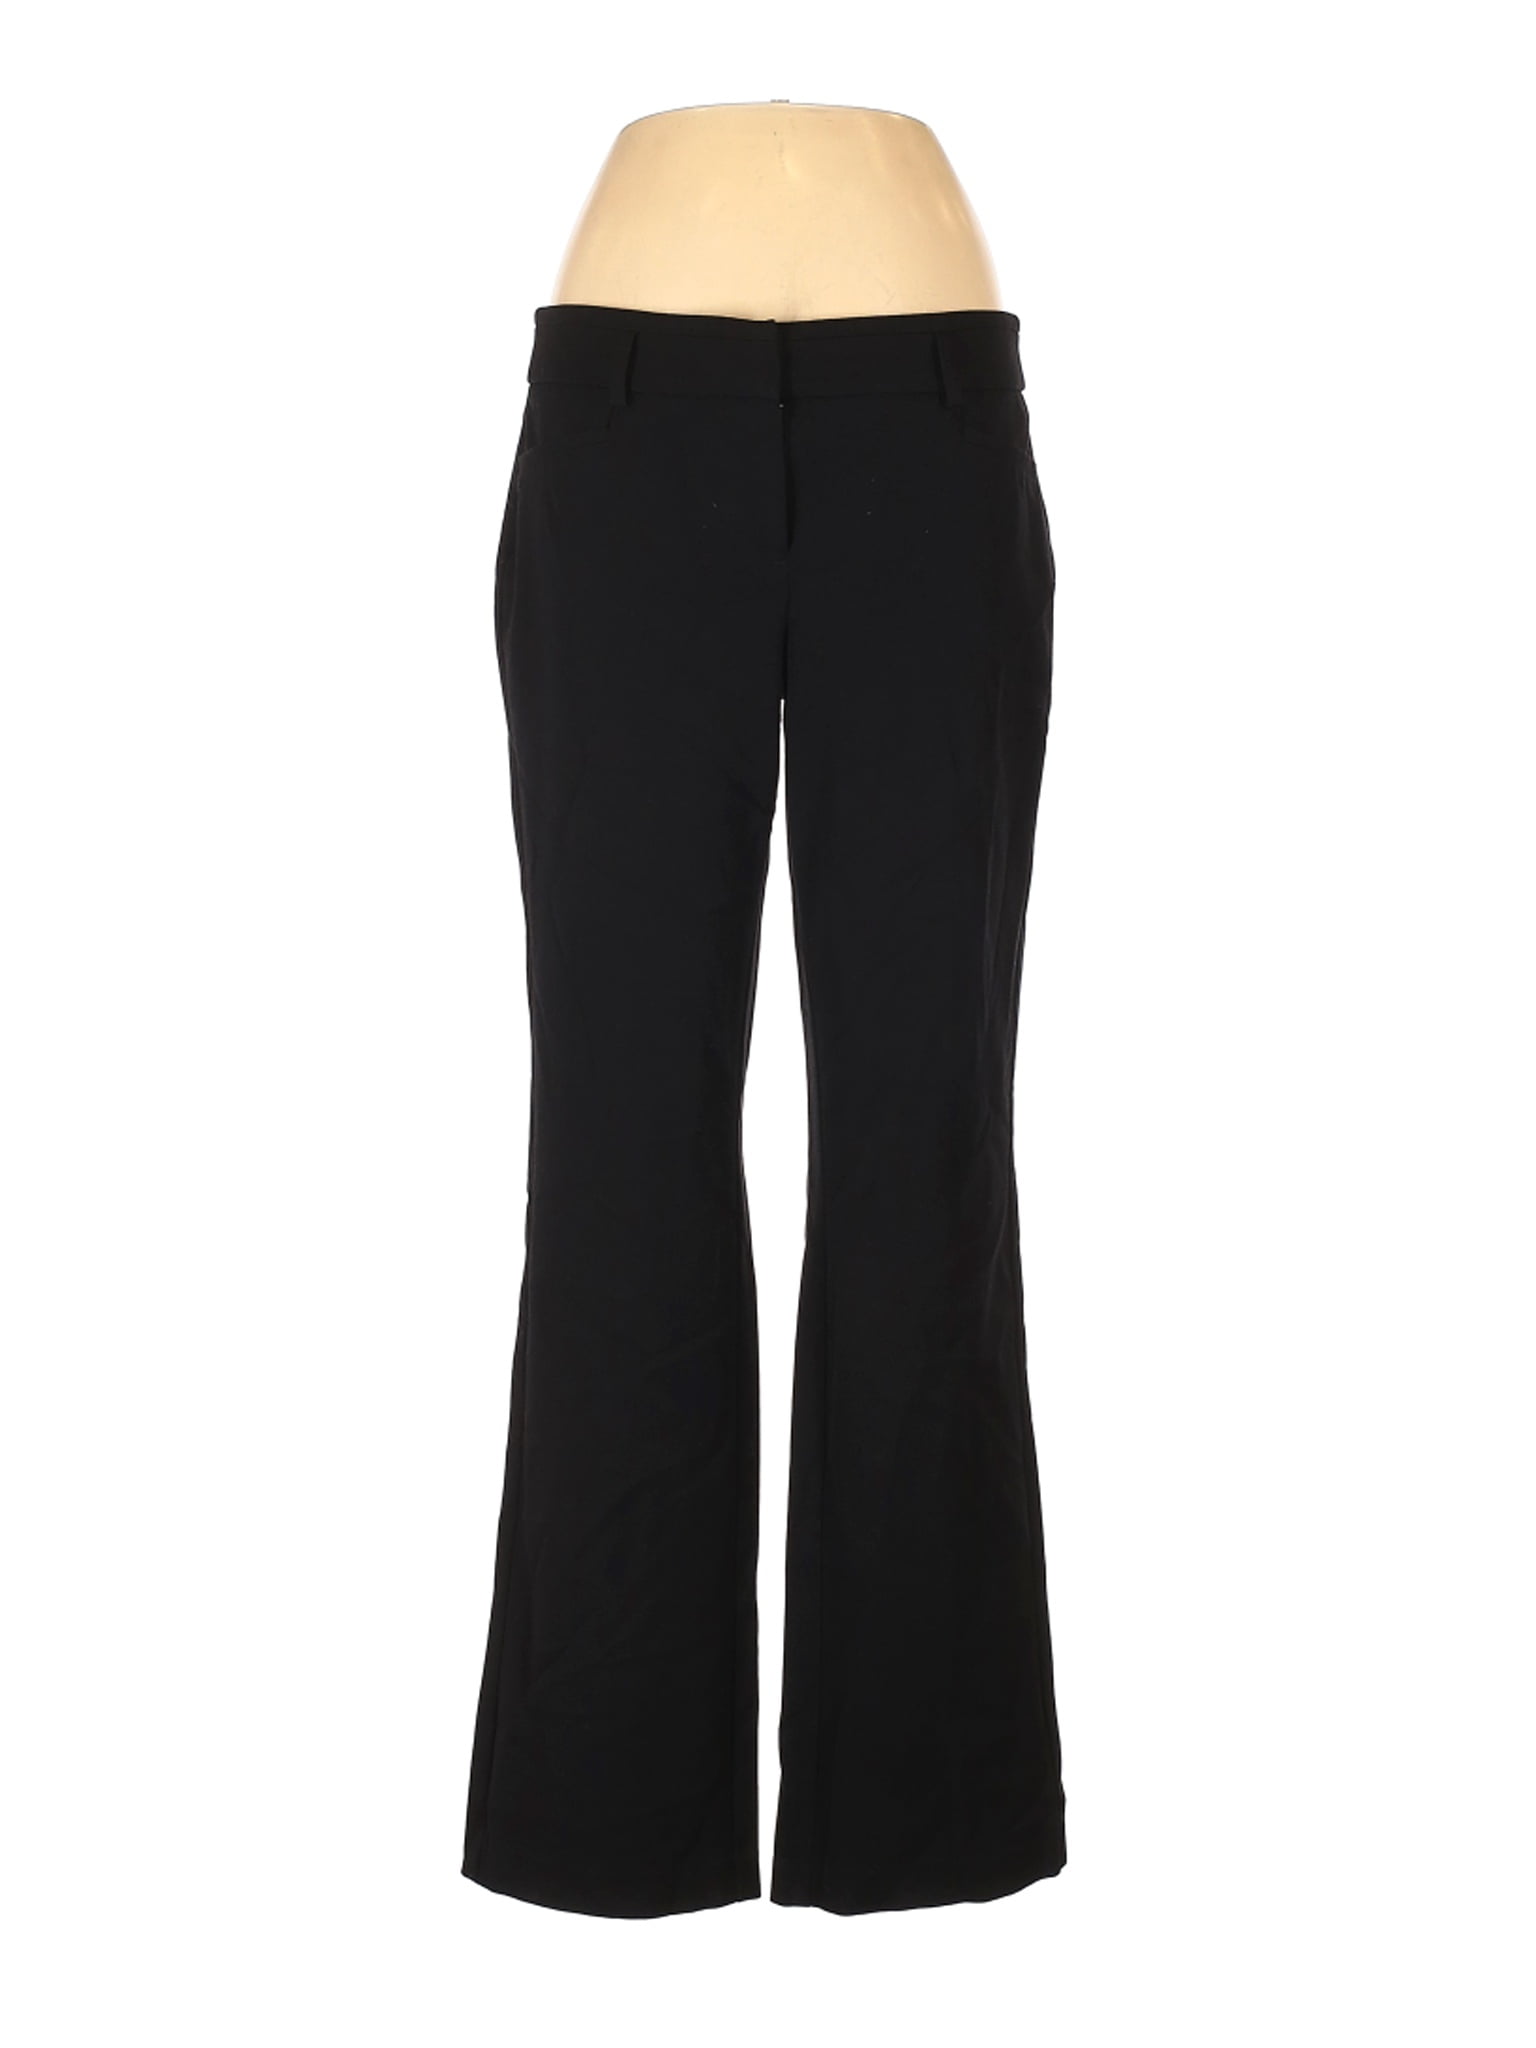 Elle - Pre-Owned Elle Women's Size 10 Dress Pants - Walmart.com ...